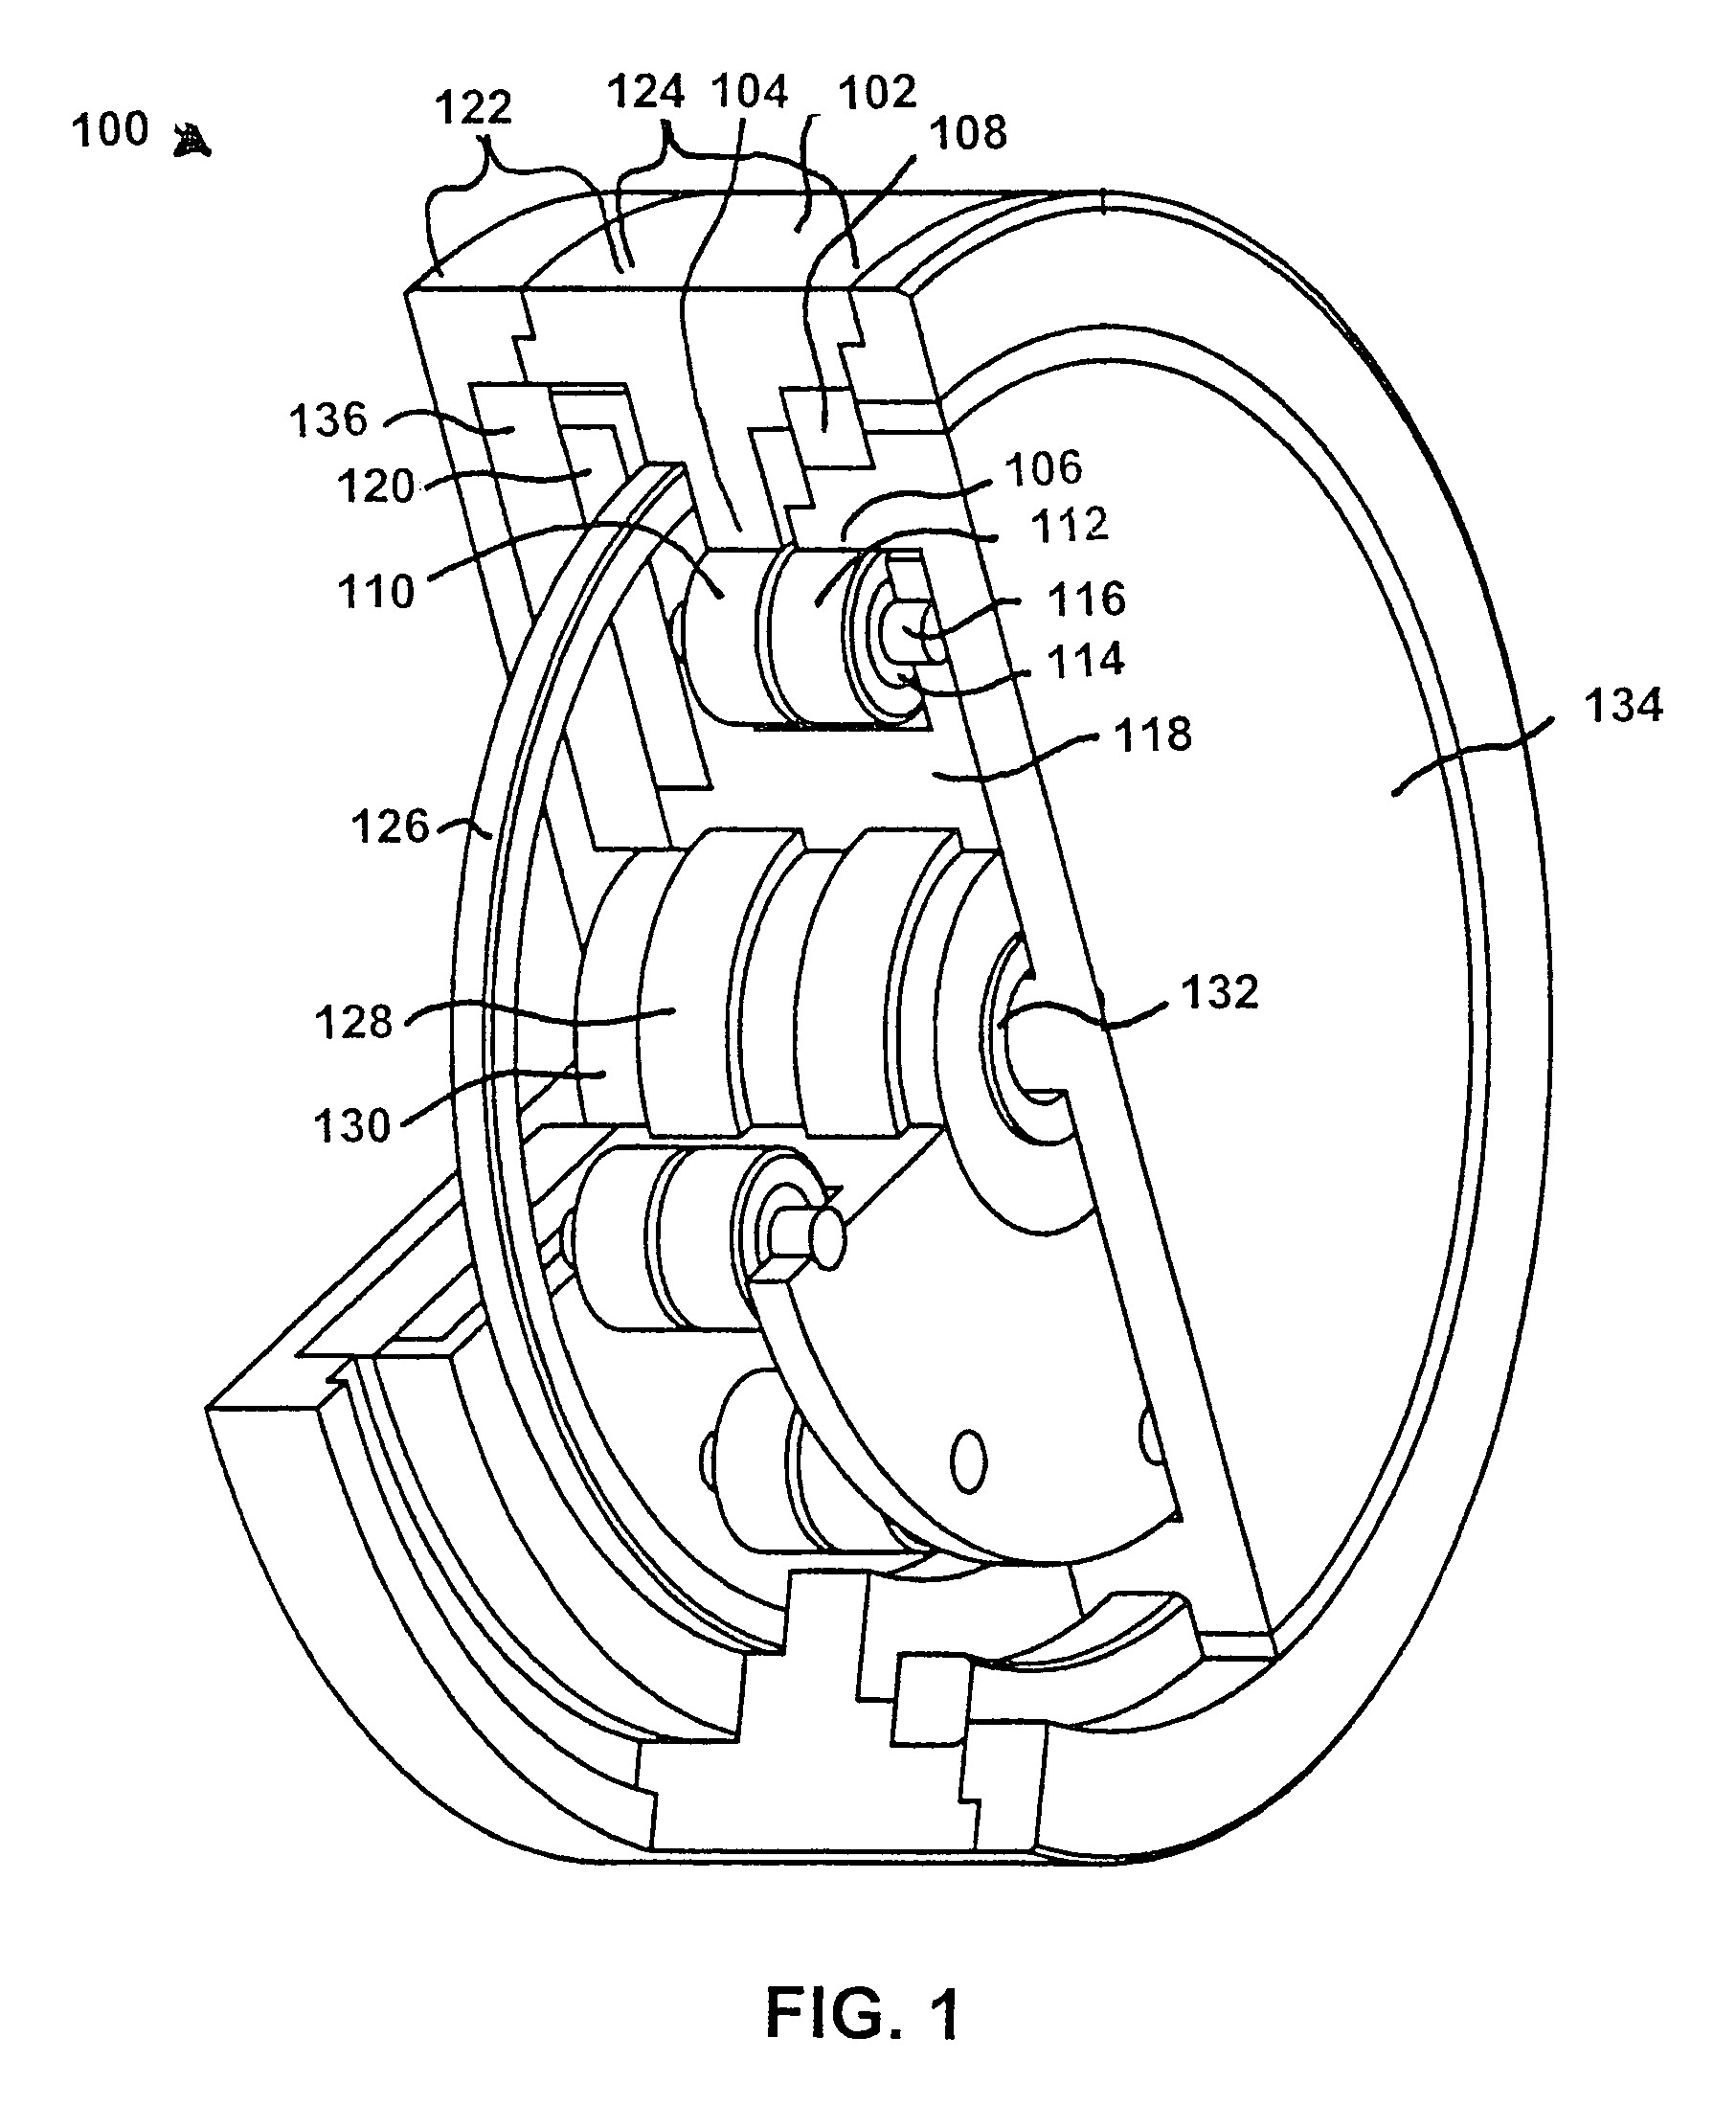 Standardized rotary actuator